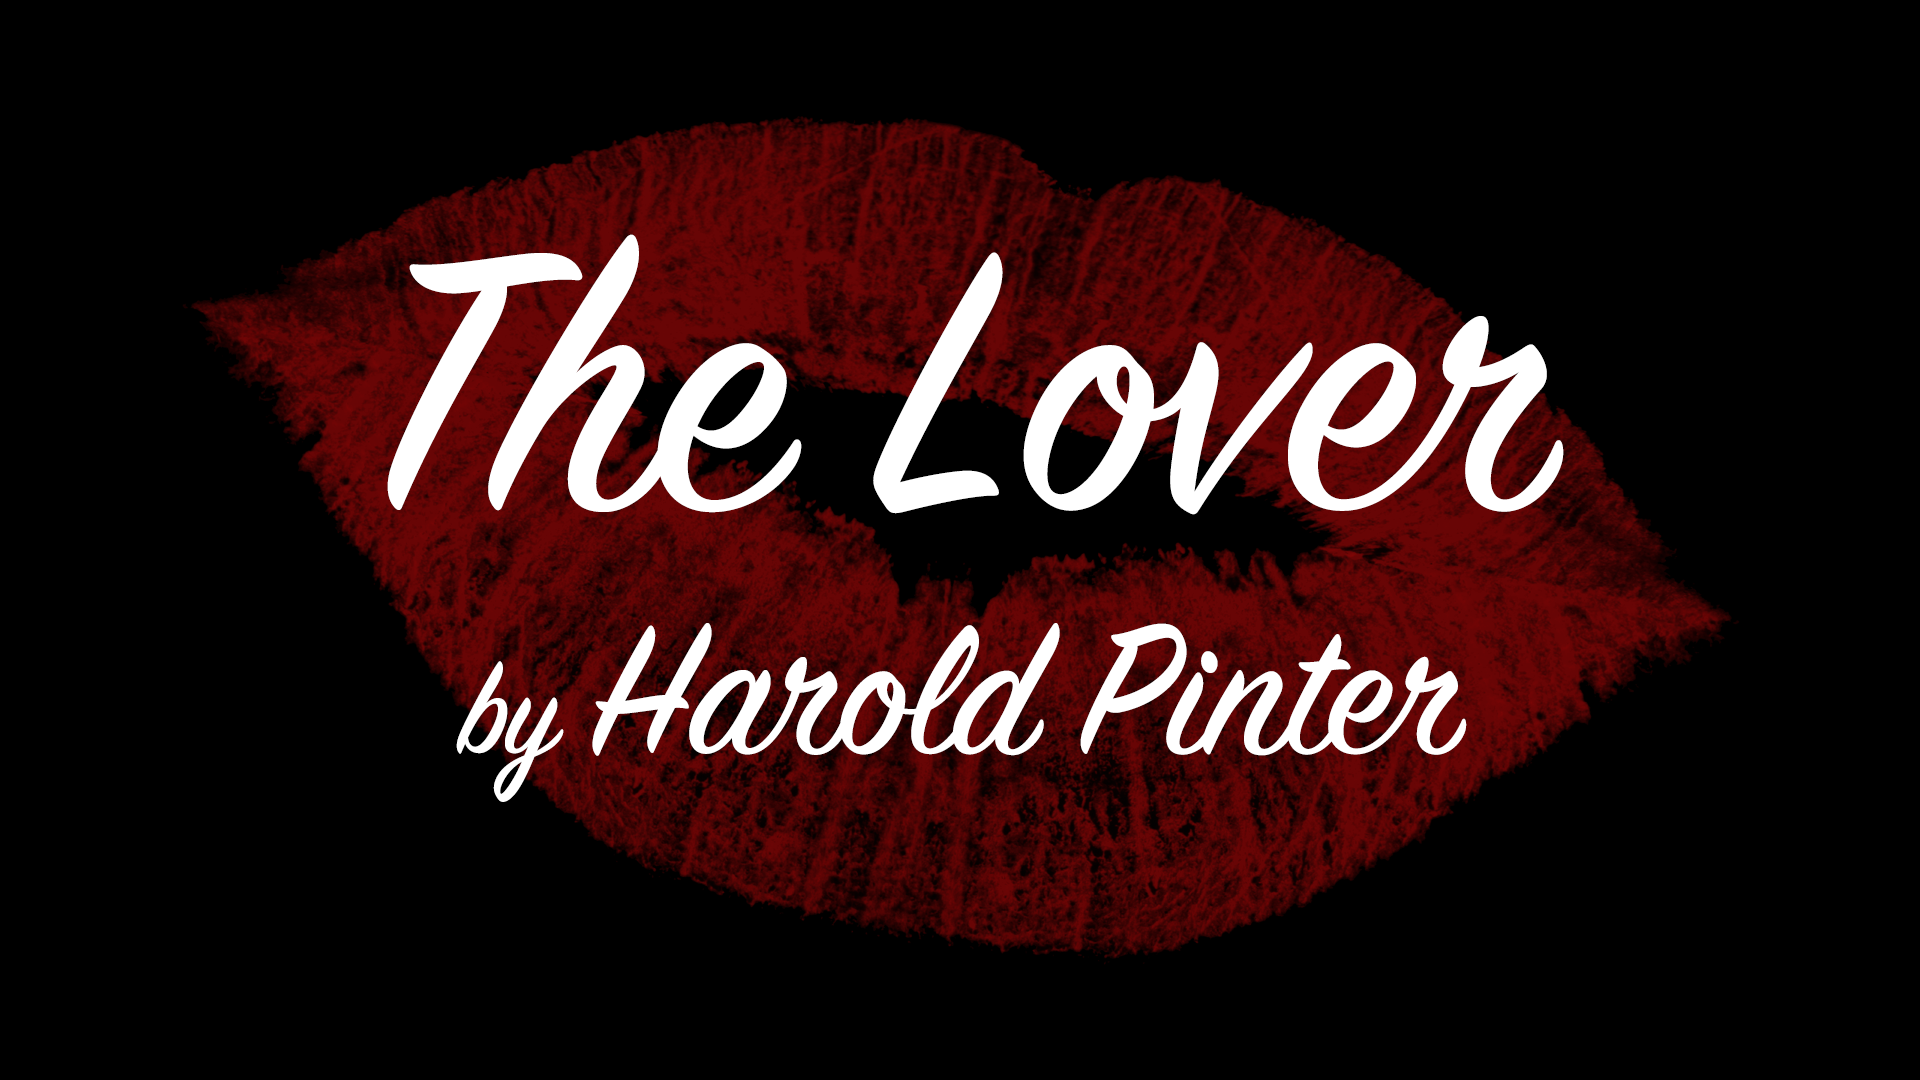 The Lover Press Release – December 27, 2016